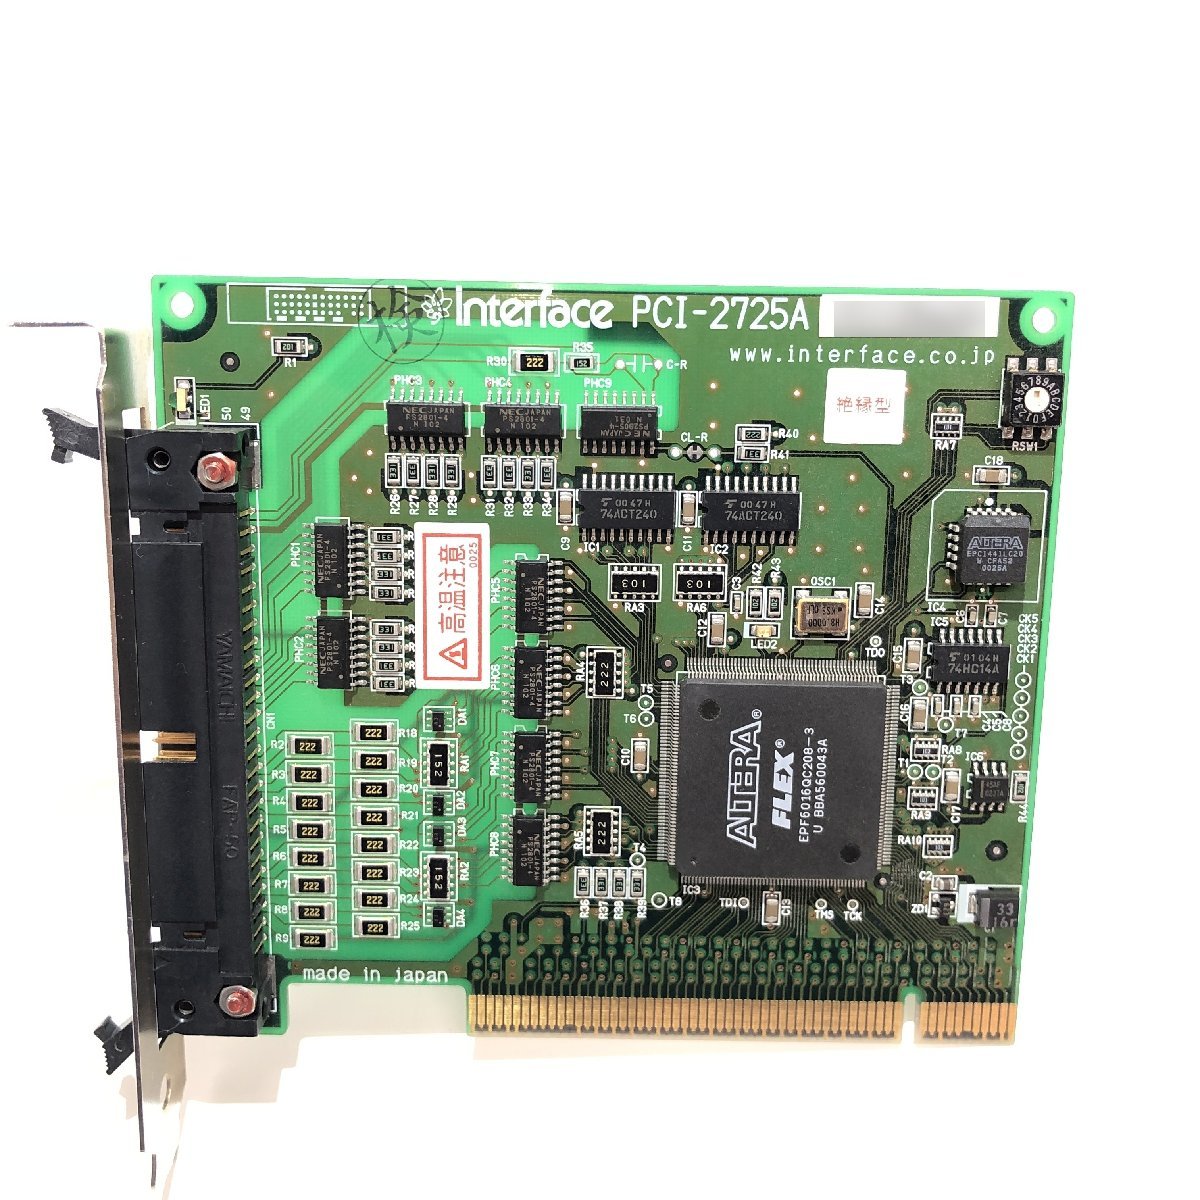 PCI-2725A DIO16/16点 絶縁12V(FC) デジタル入出力 インターフェース モジュール INTERFACE 0605128